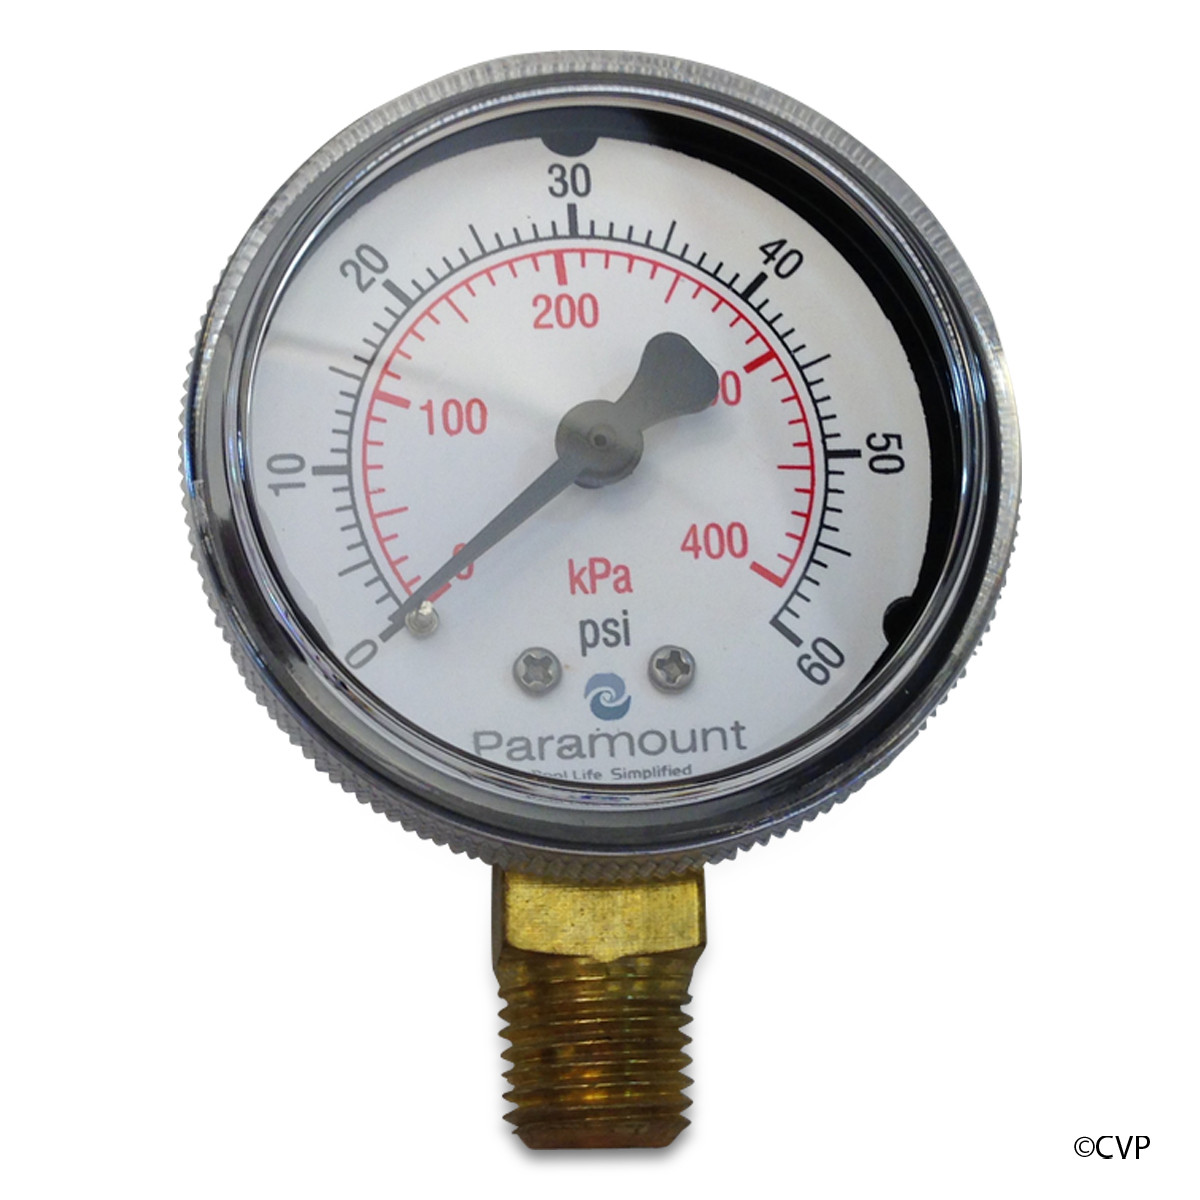 005-302-3590-00 Paramount Pressure Gauge For Water Valve